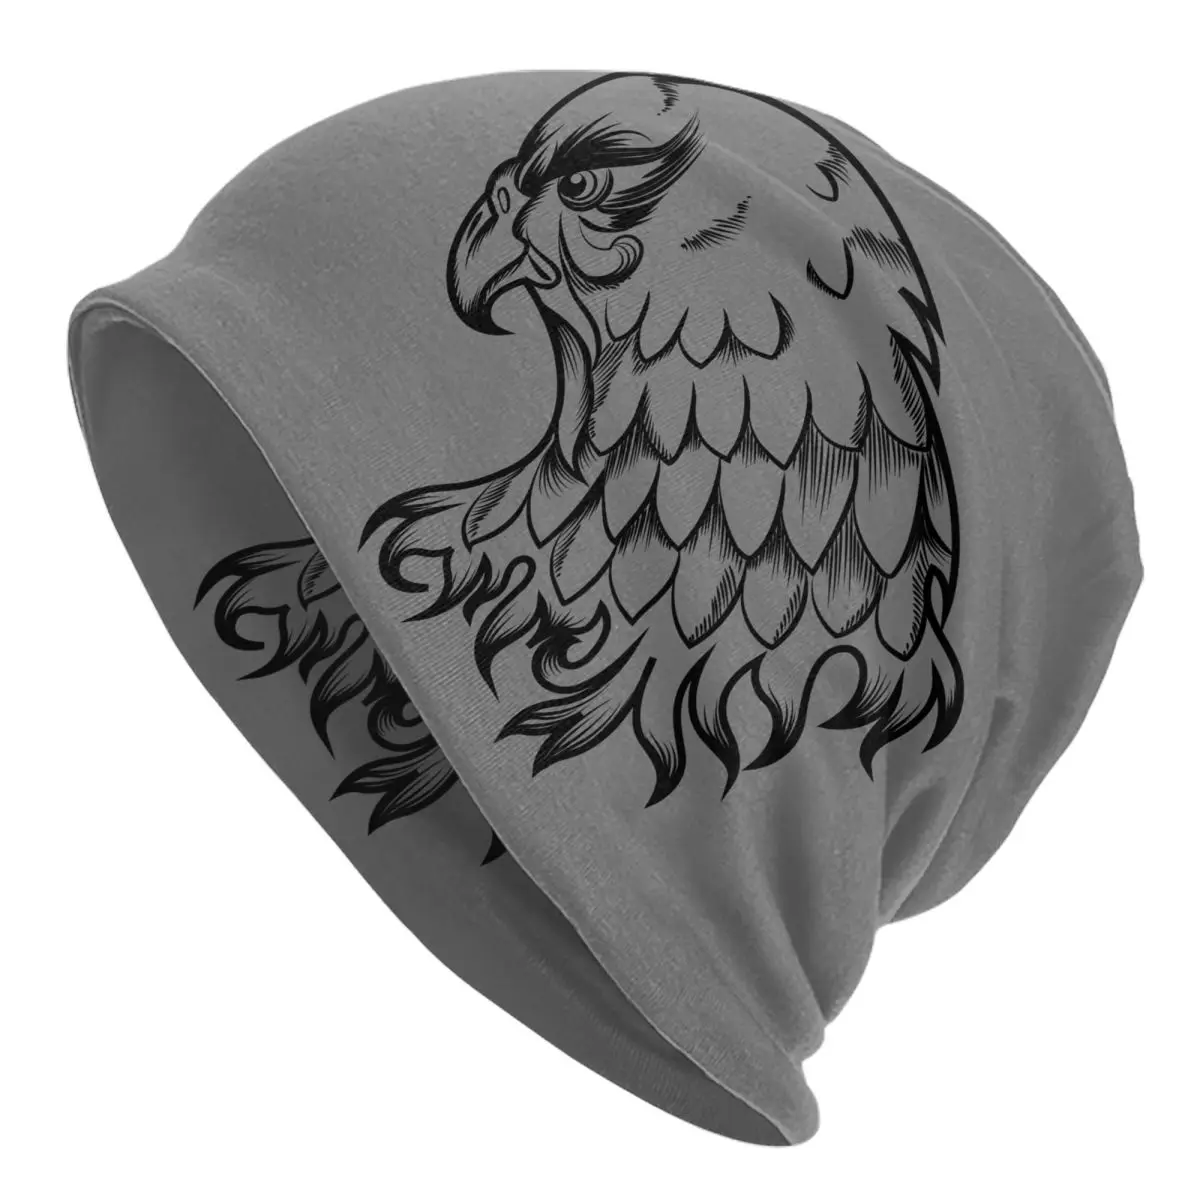 Eagle Adult Men's Women's Knit Hat Keep warm winter knitted hat